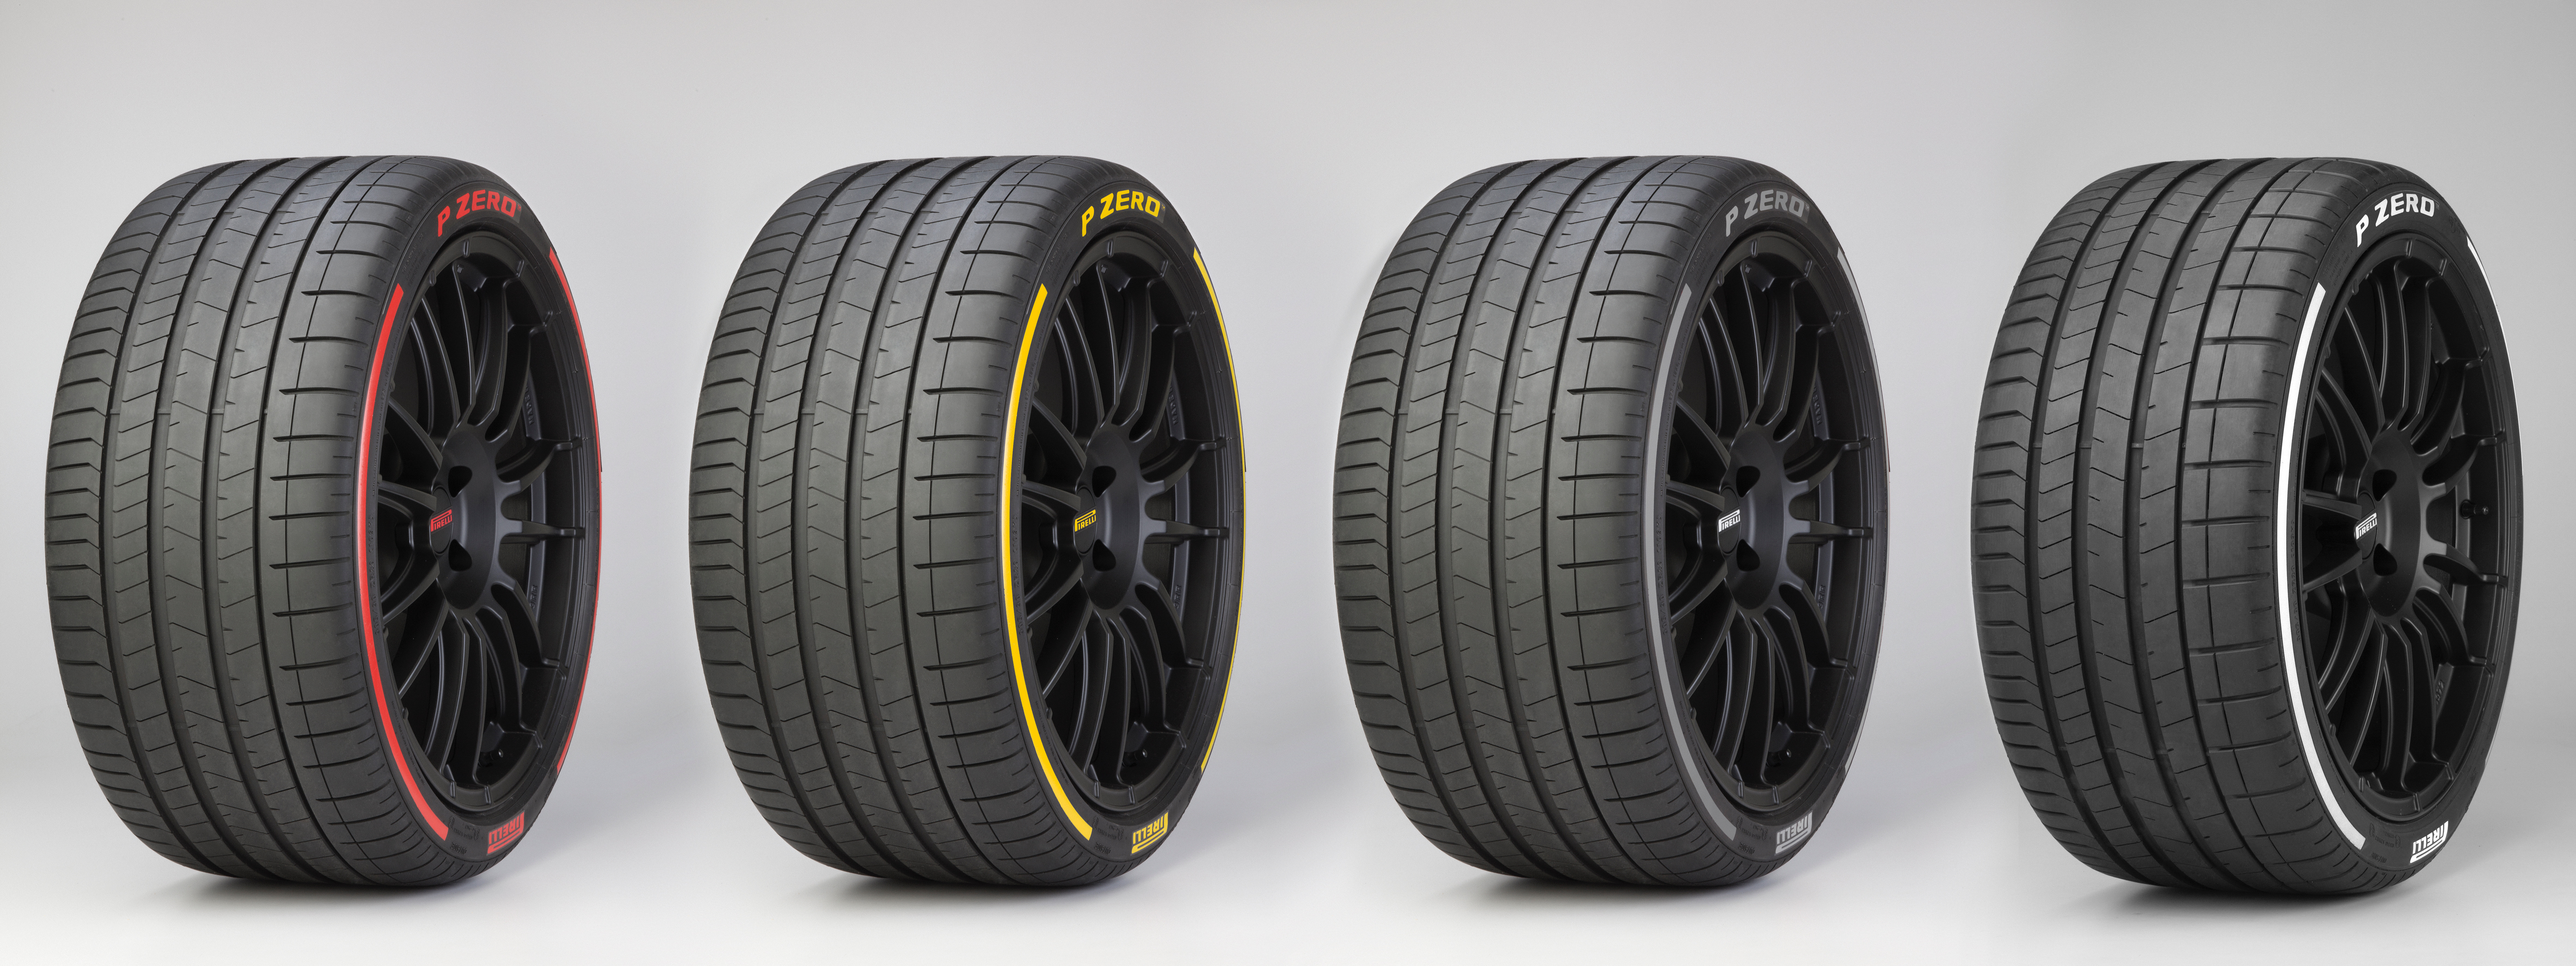 Pirelli, Pirelli showcases P Zero Winter, special track-day tires, ClassicCars.com Journal